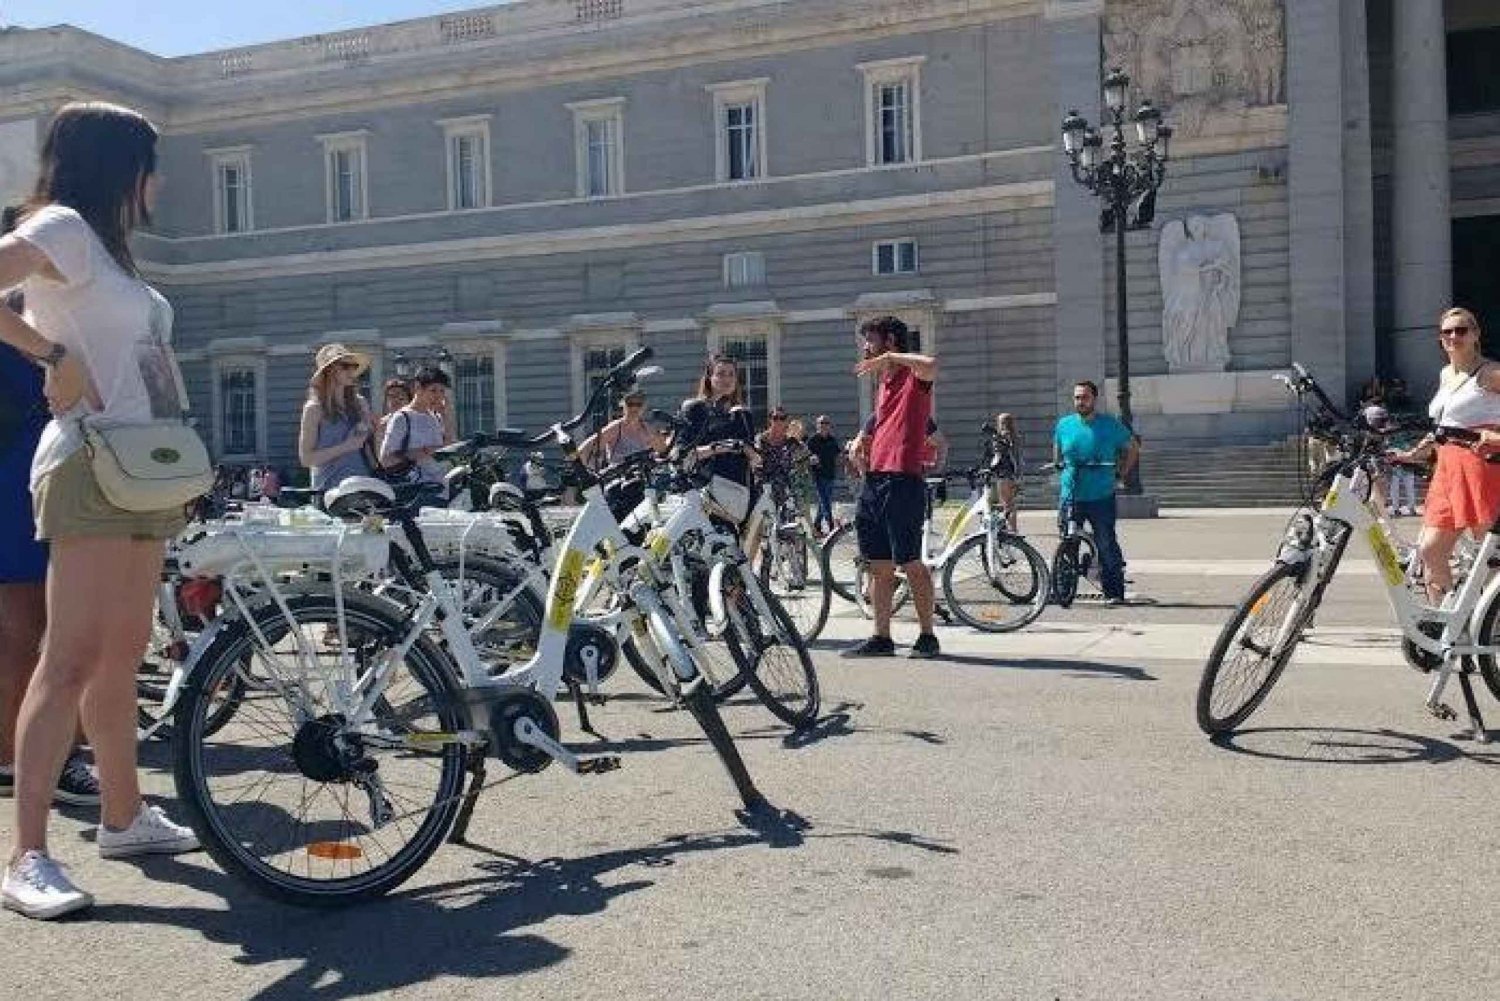 Madrid: 3 uur durende sightseeing-fietstocht met e-bike